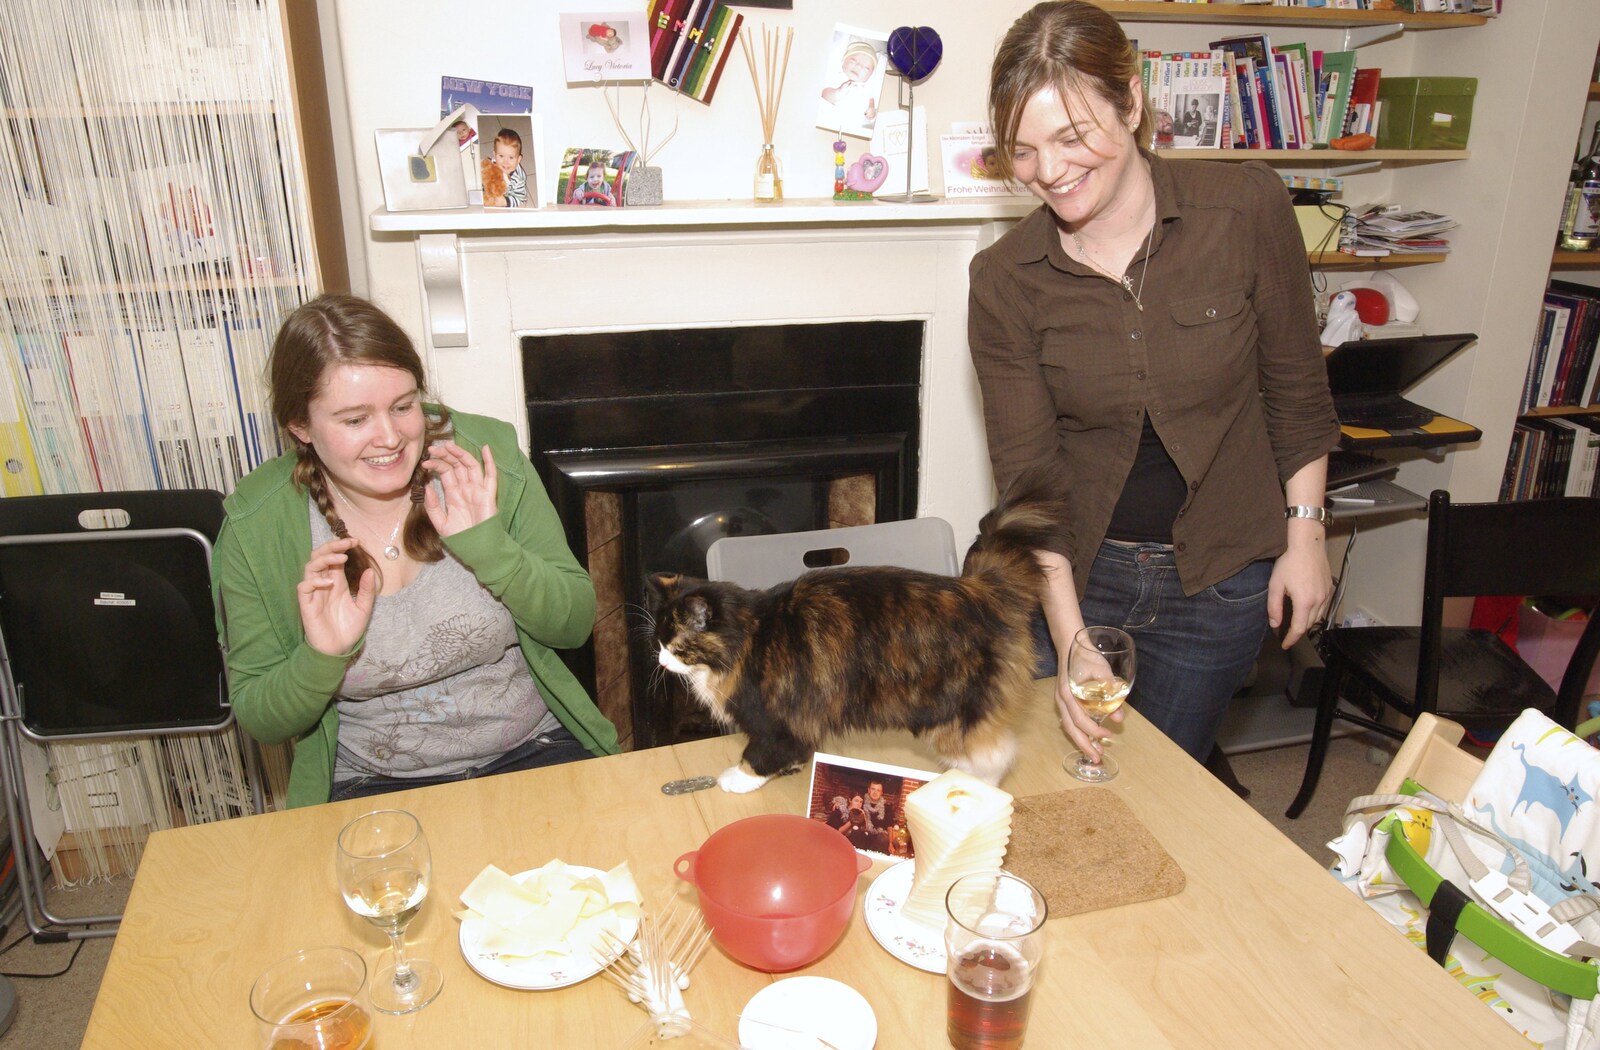 Thai with Rachel and Sam, and Steve's Taptu Birthday Cake, Cambridge - 12th January 2008: The cat walks around the dinner table